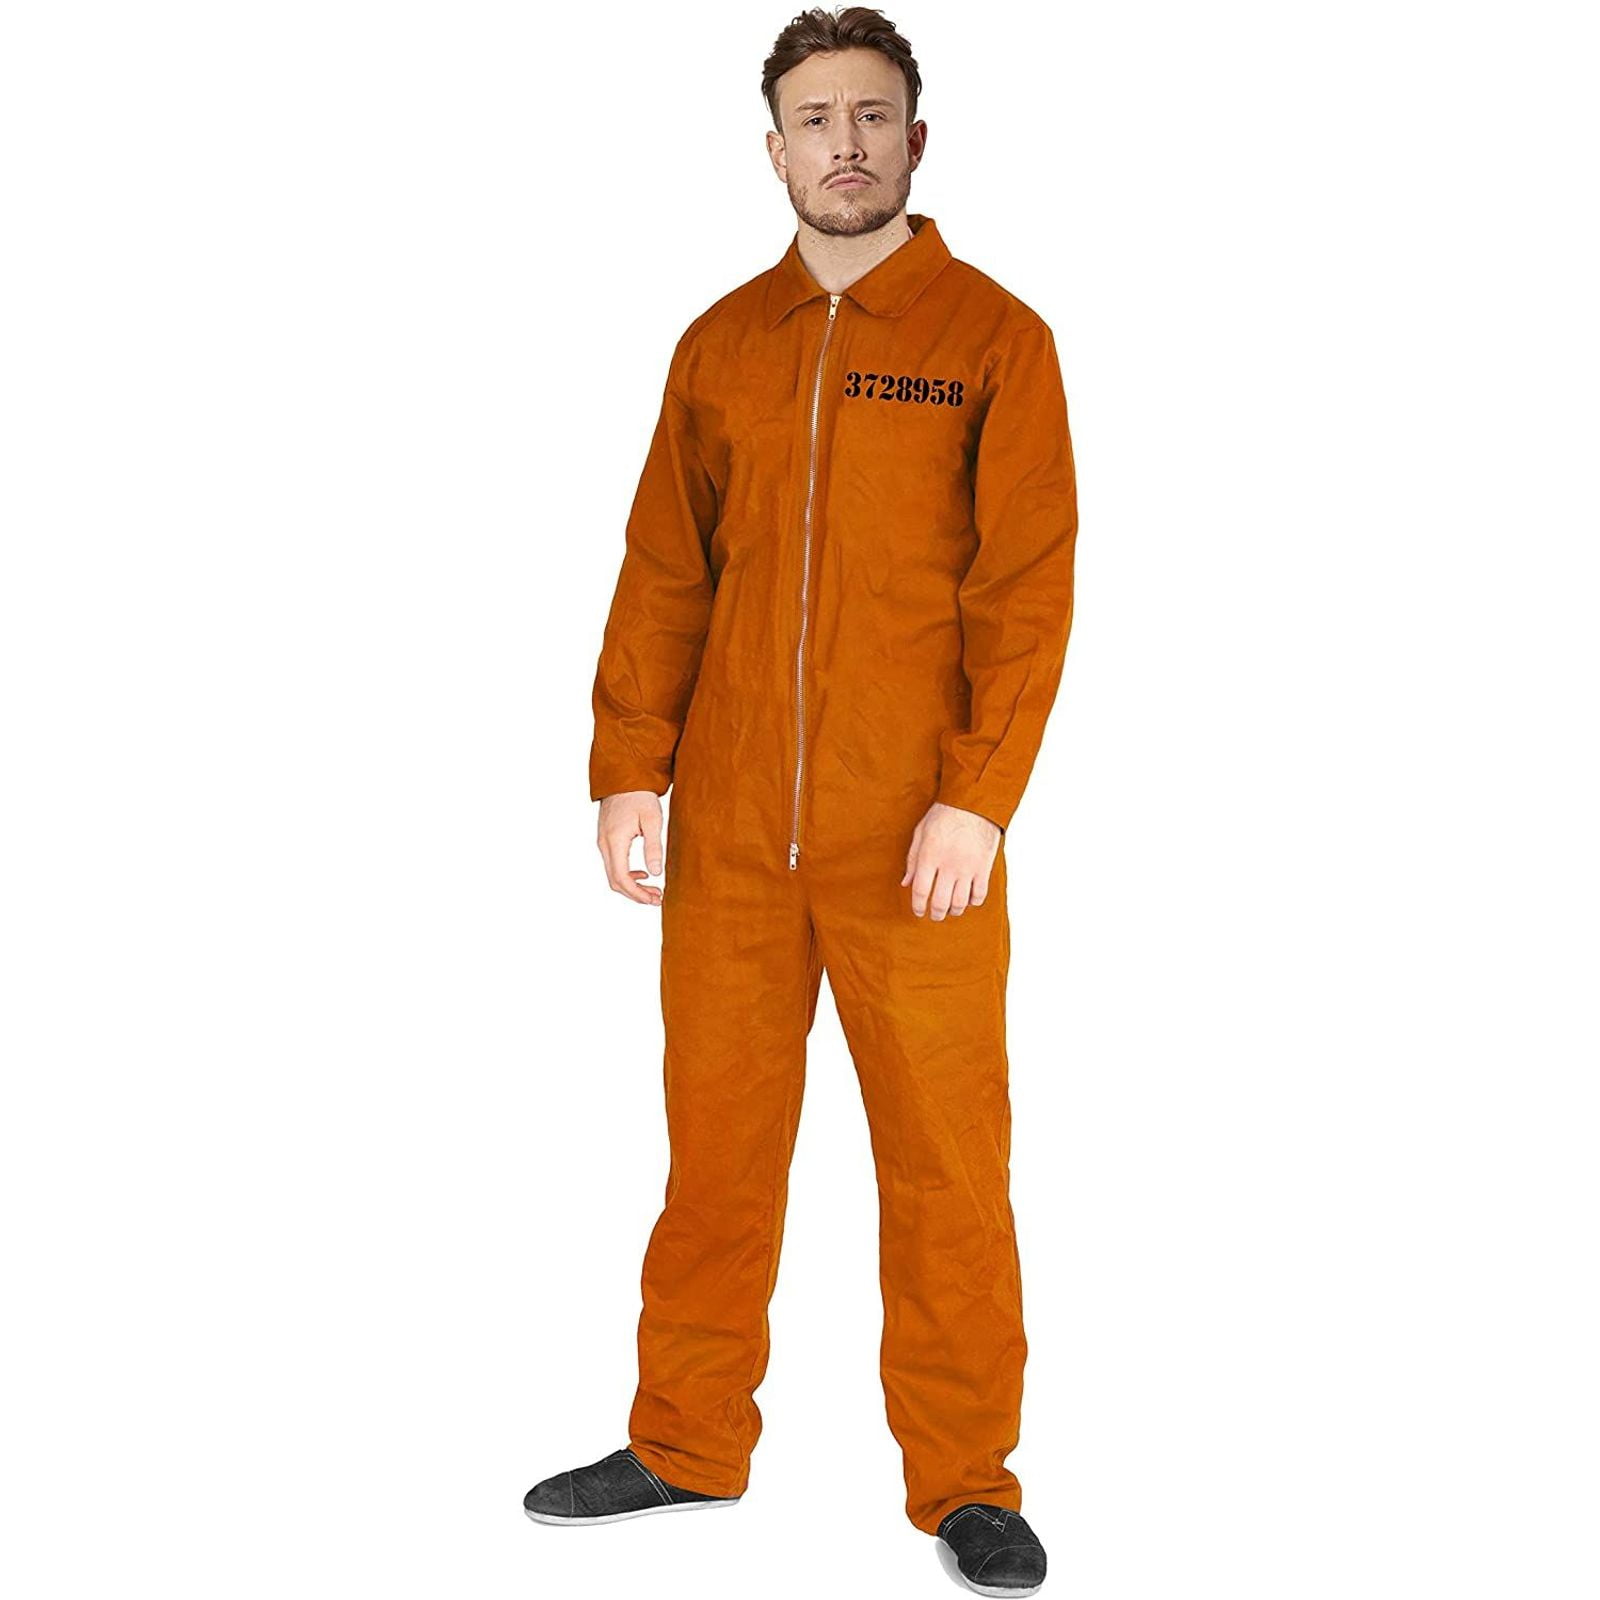 Group Halloween Costume  Orange prisoner costume Jumpsuit Orange prisoner